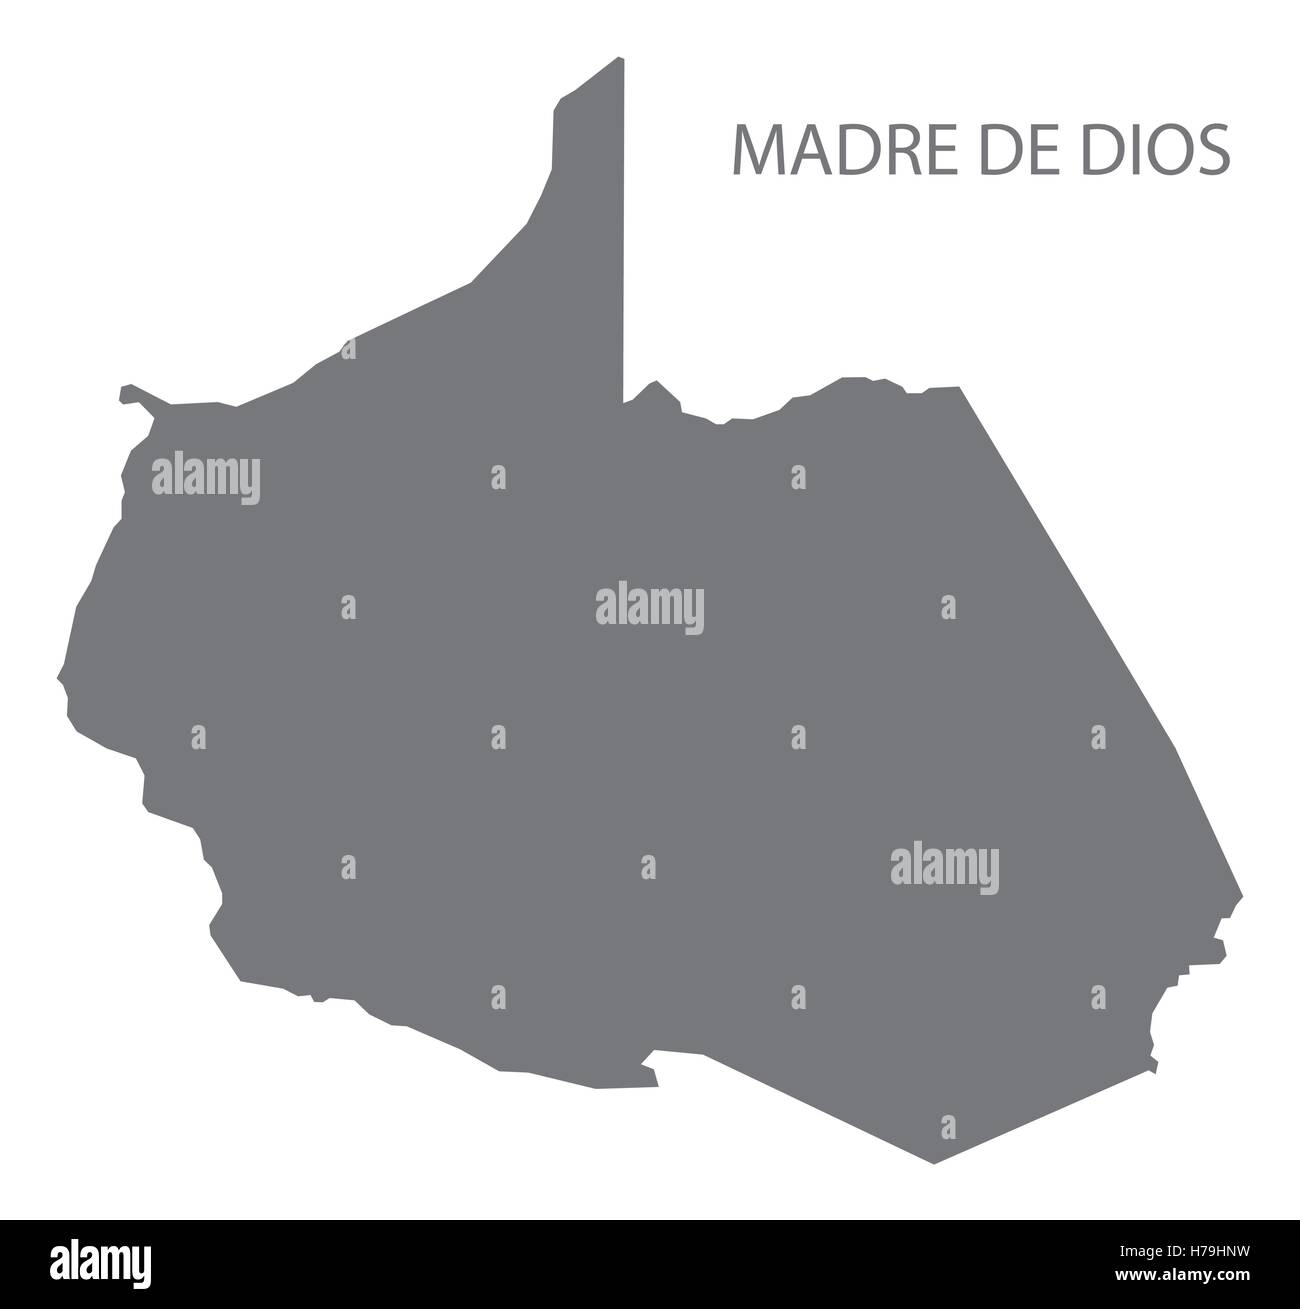 Madre de dios Peru Map grey Stock Vector